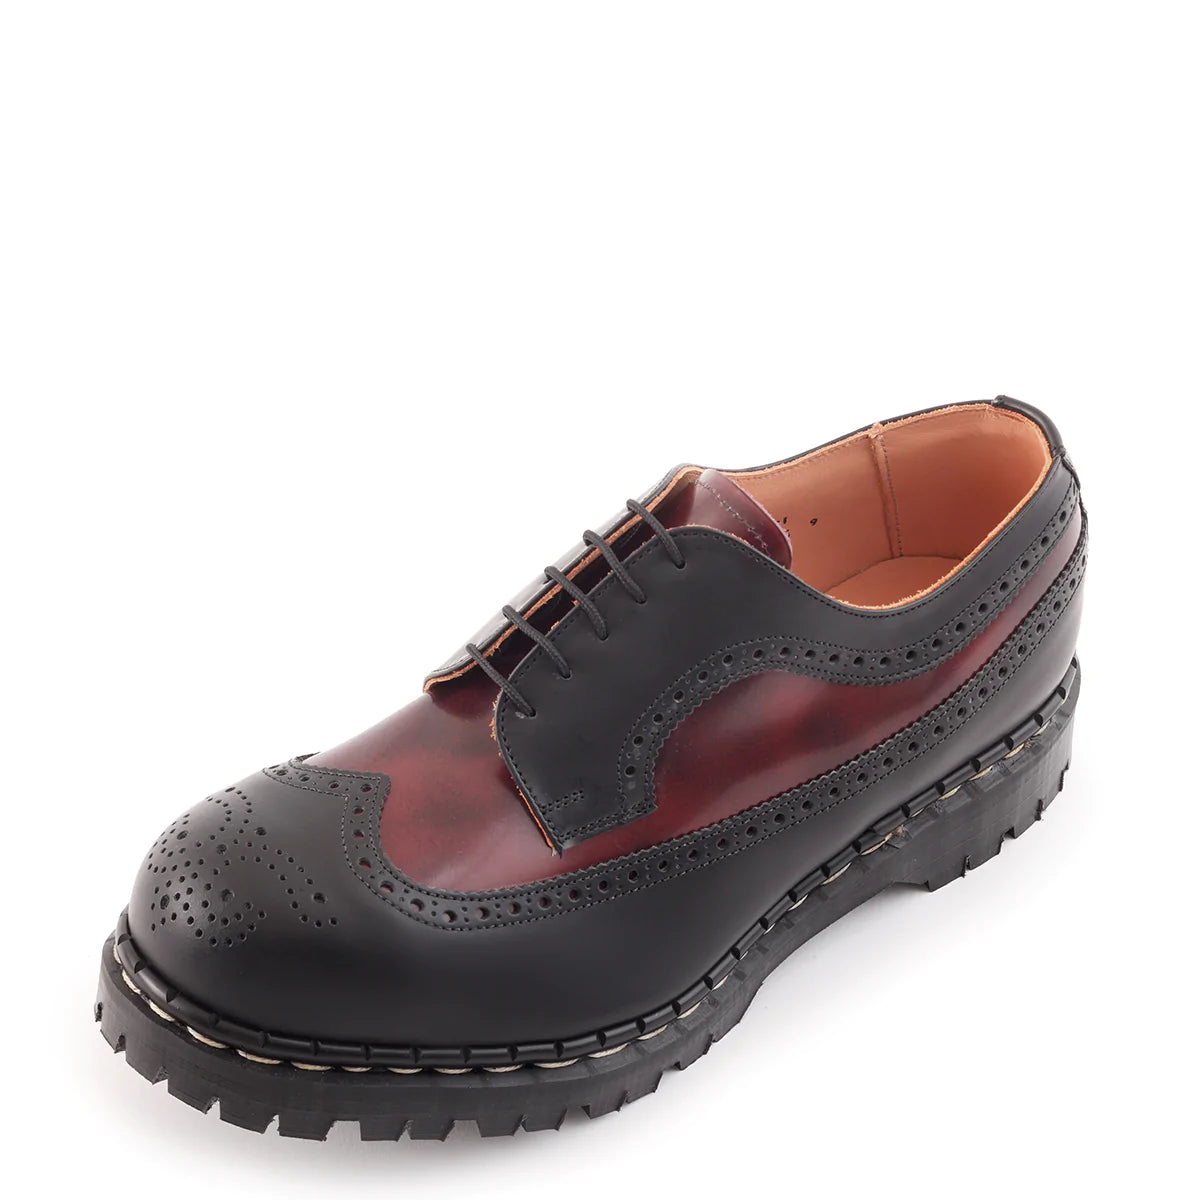 GRIPFAST Burgundy & Black American Steel Toe Capped Brogue Shoe